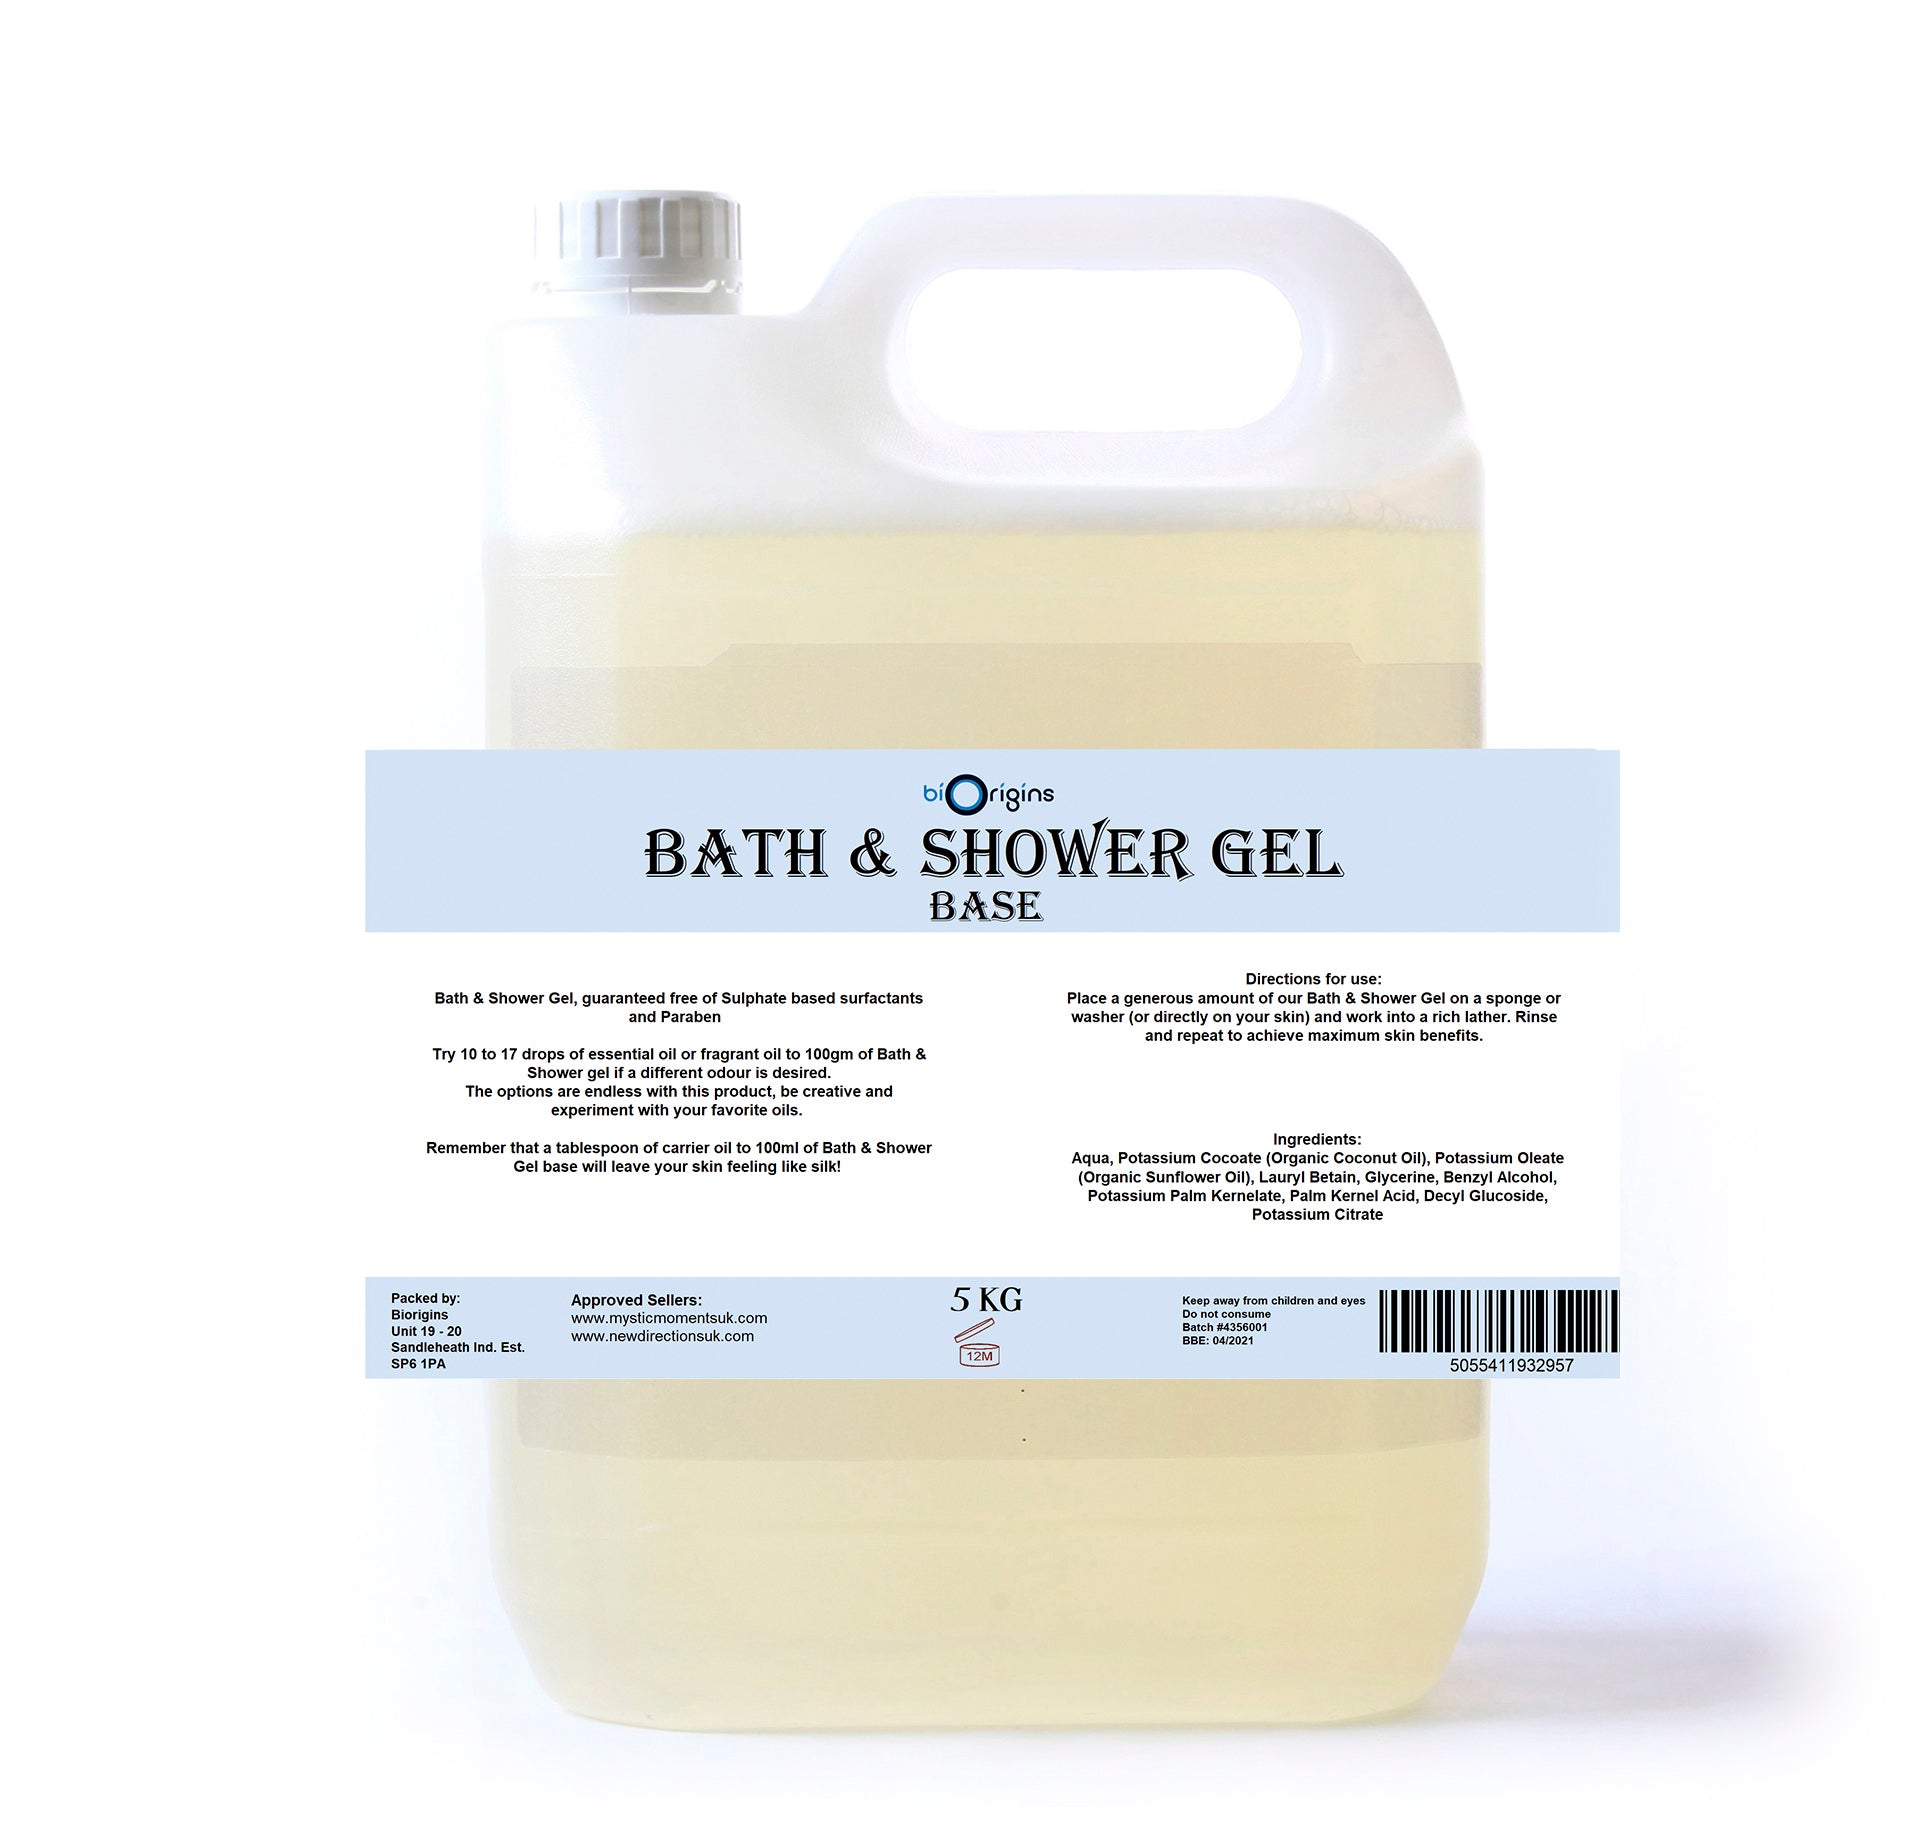 Bath & Shower Gel - Natural Unscented - S&P Free